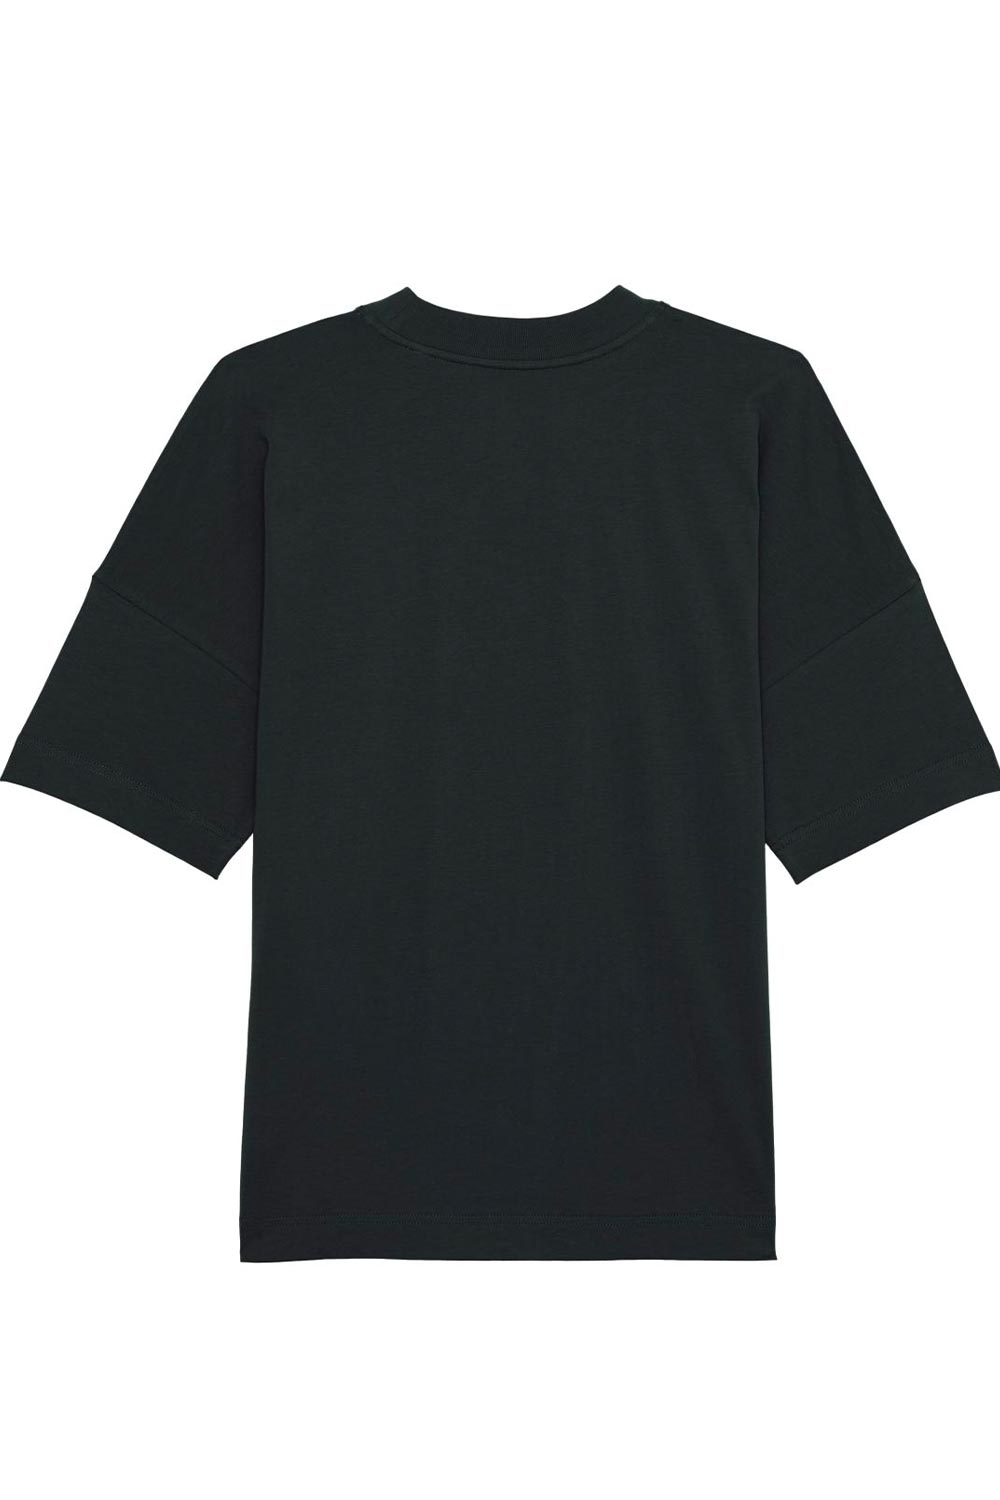 Fjednfall Raven - Clubkatzen Unisex Premium Oversize T-Shirt